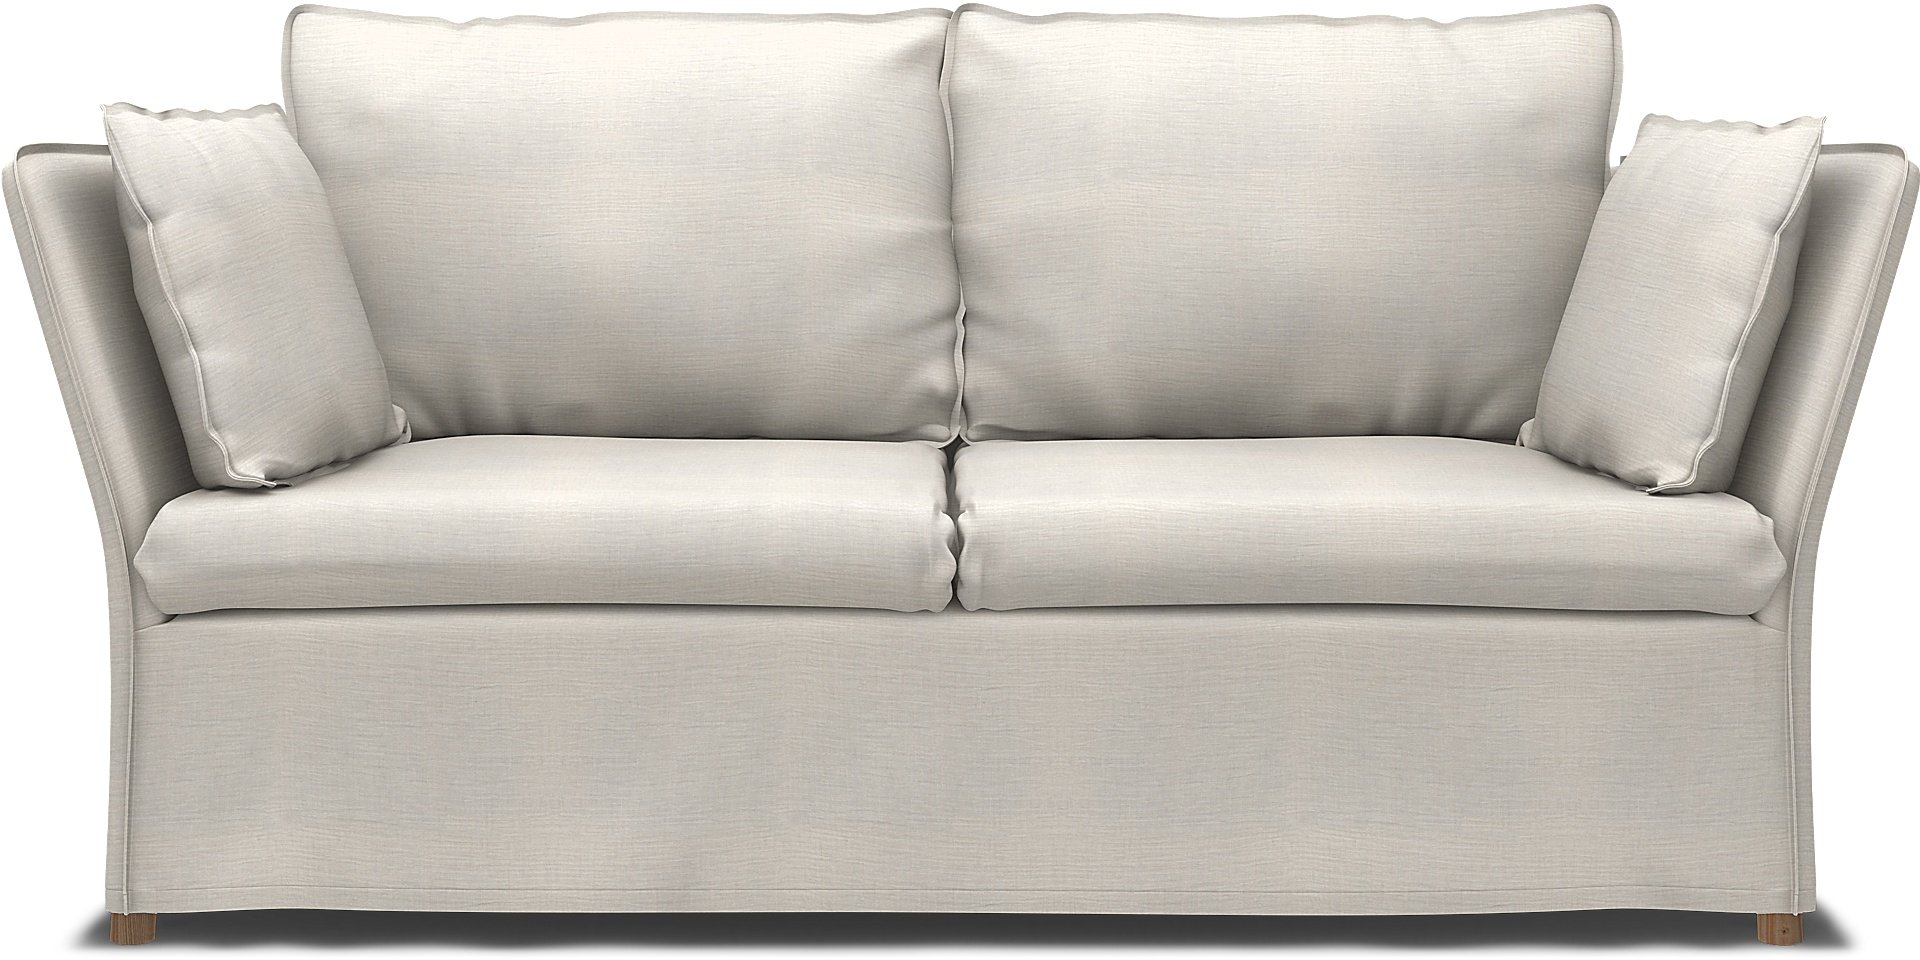 IKEA - Backsalen 2 seater sofa, Soft White, Linen - Bemz